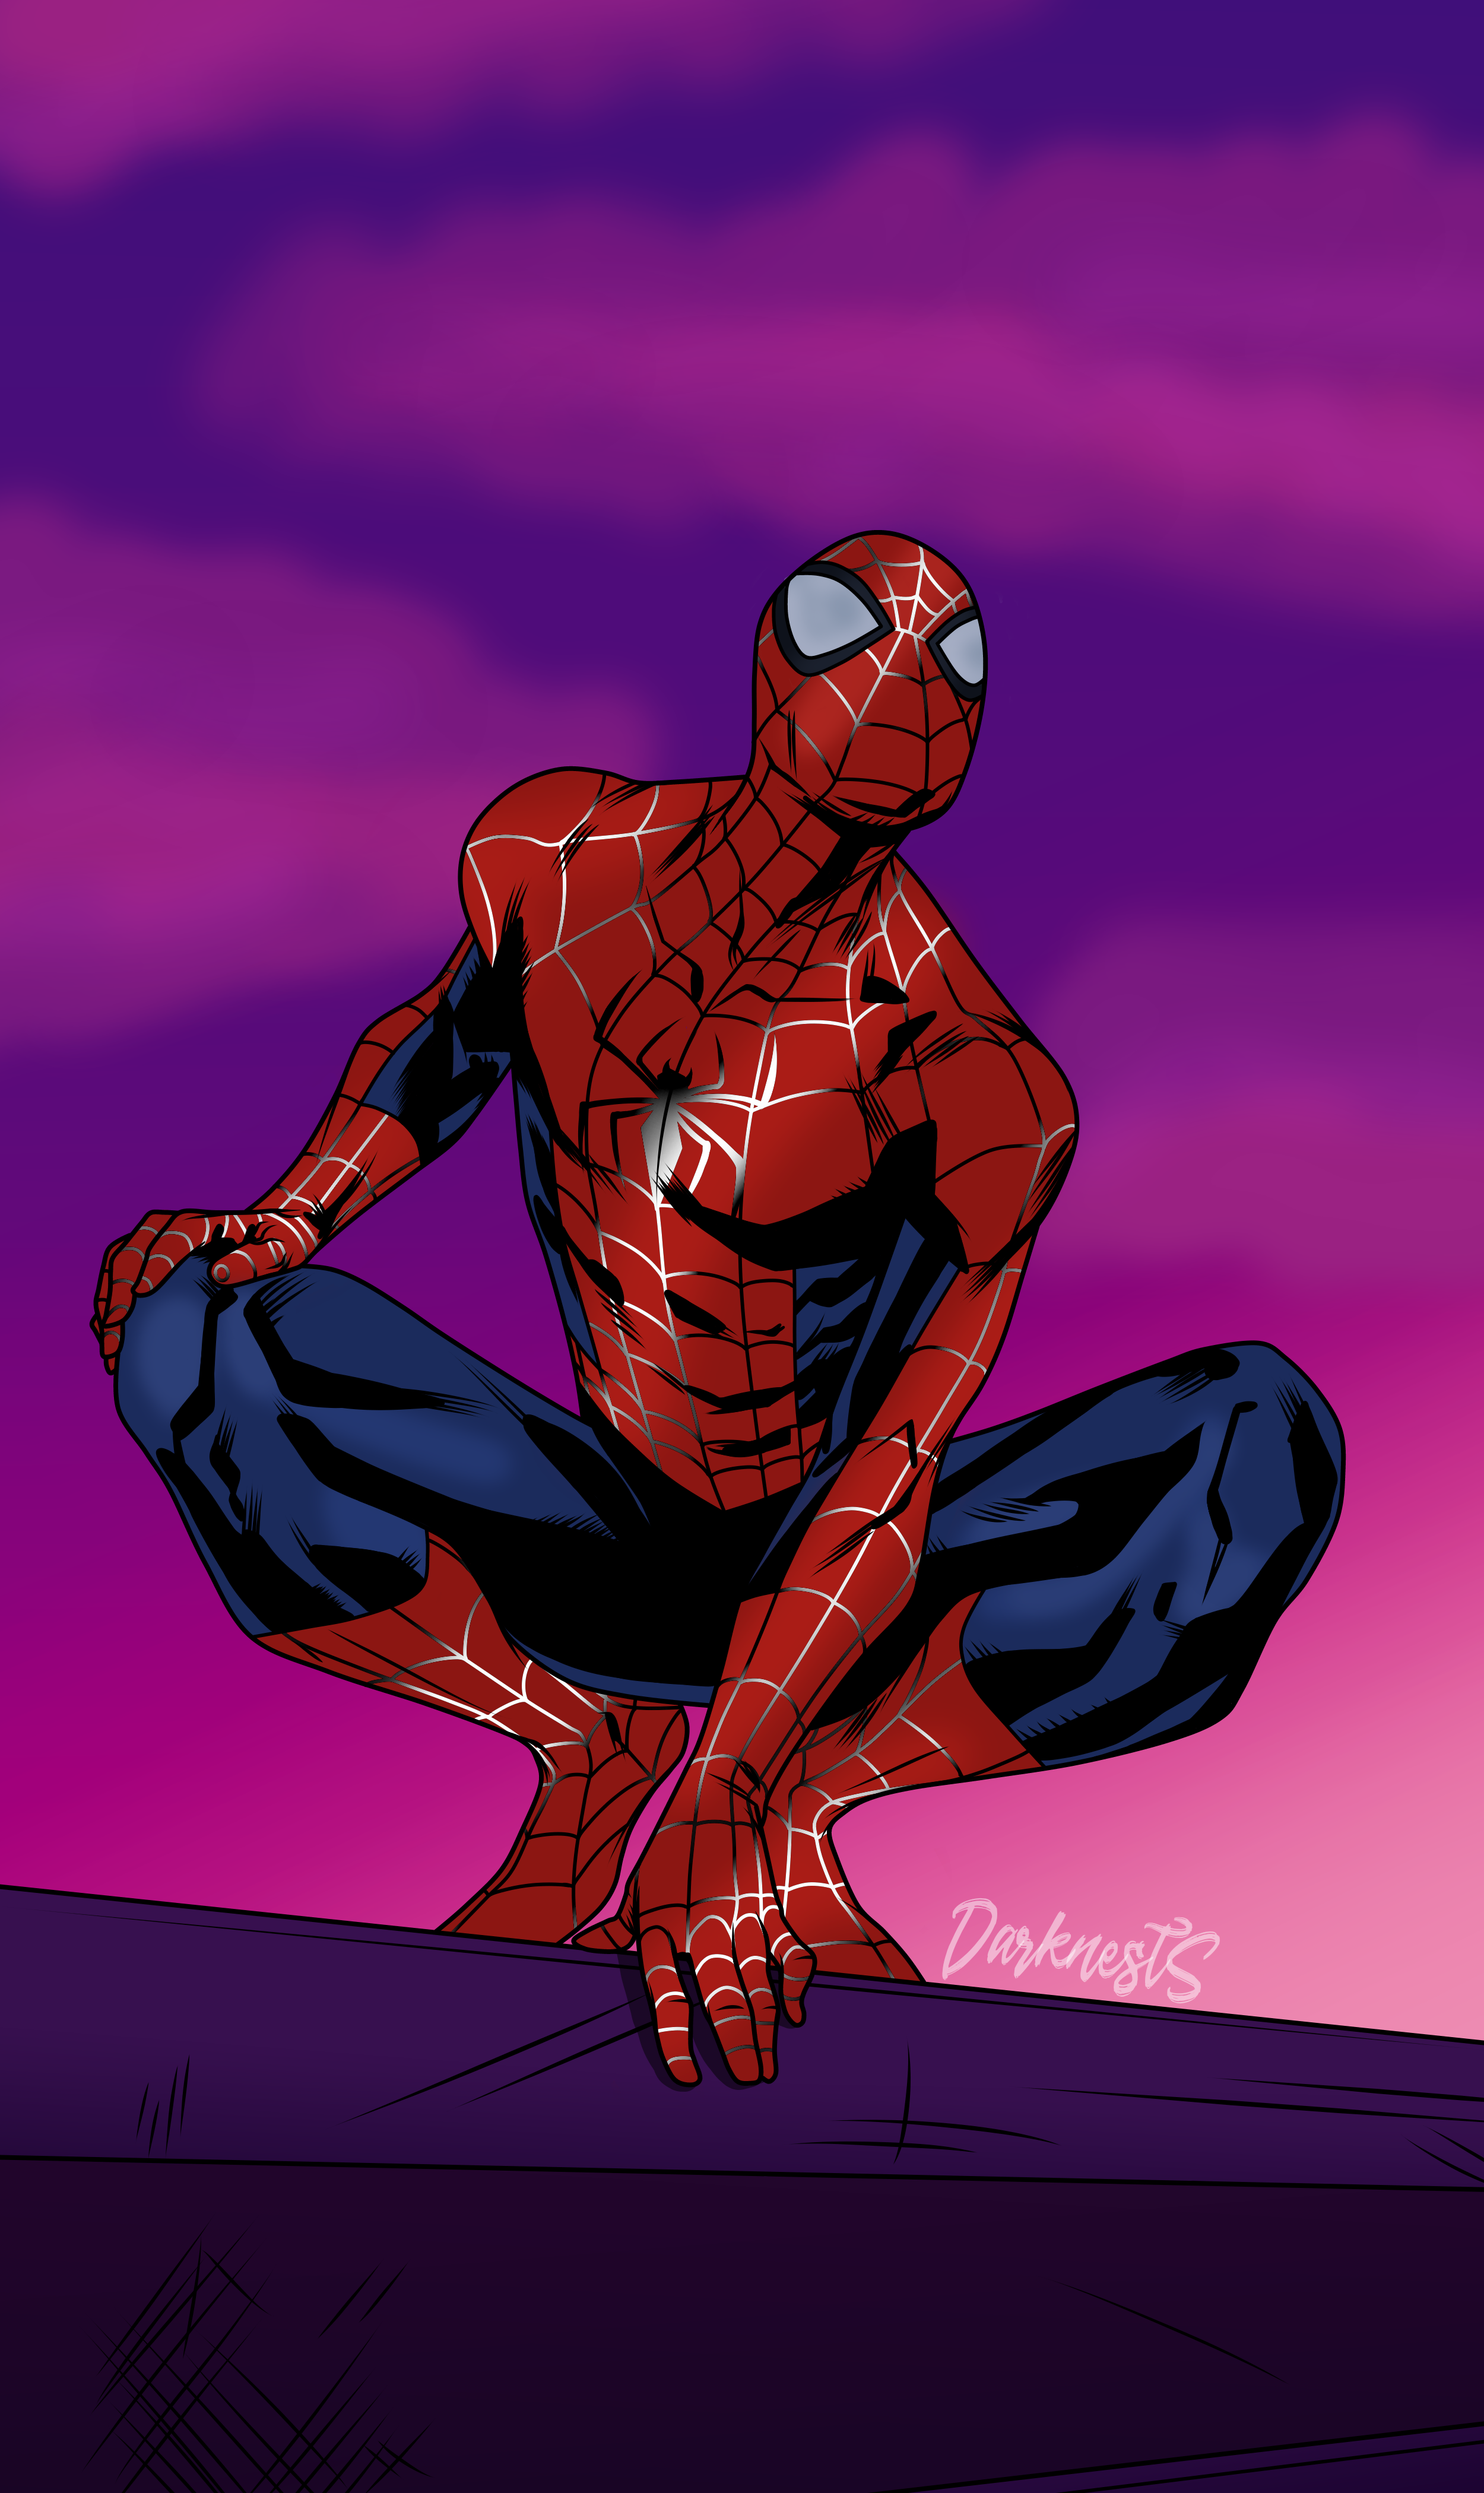 Spider-Man (The New Animated Series Style) by DarknestSpawn on DeviantArt